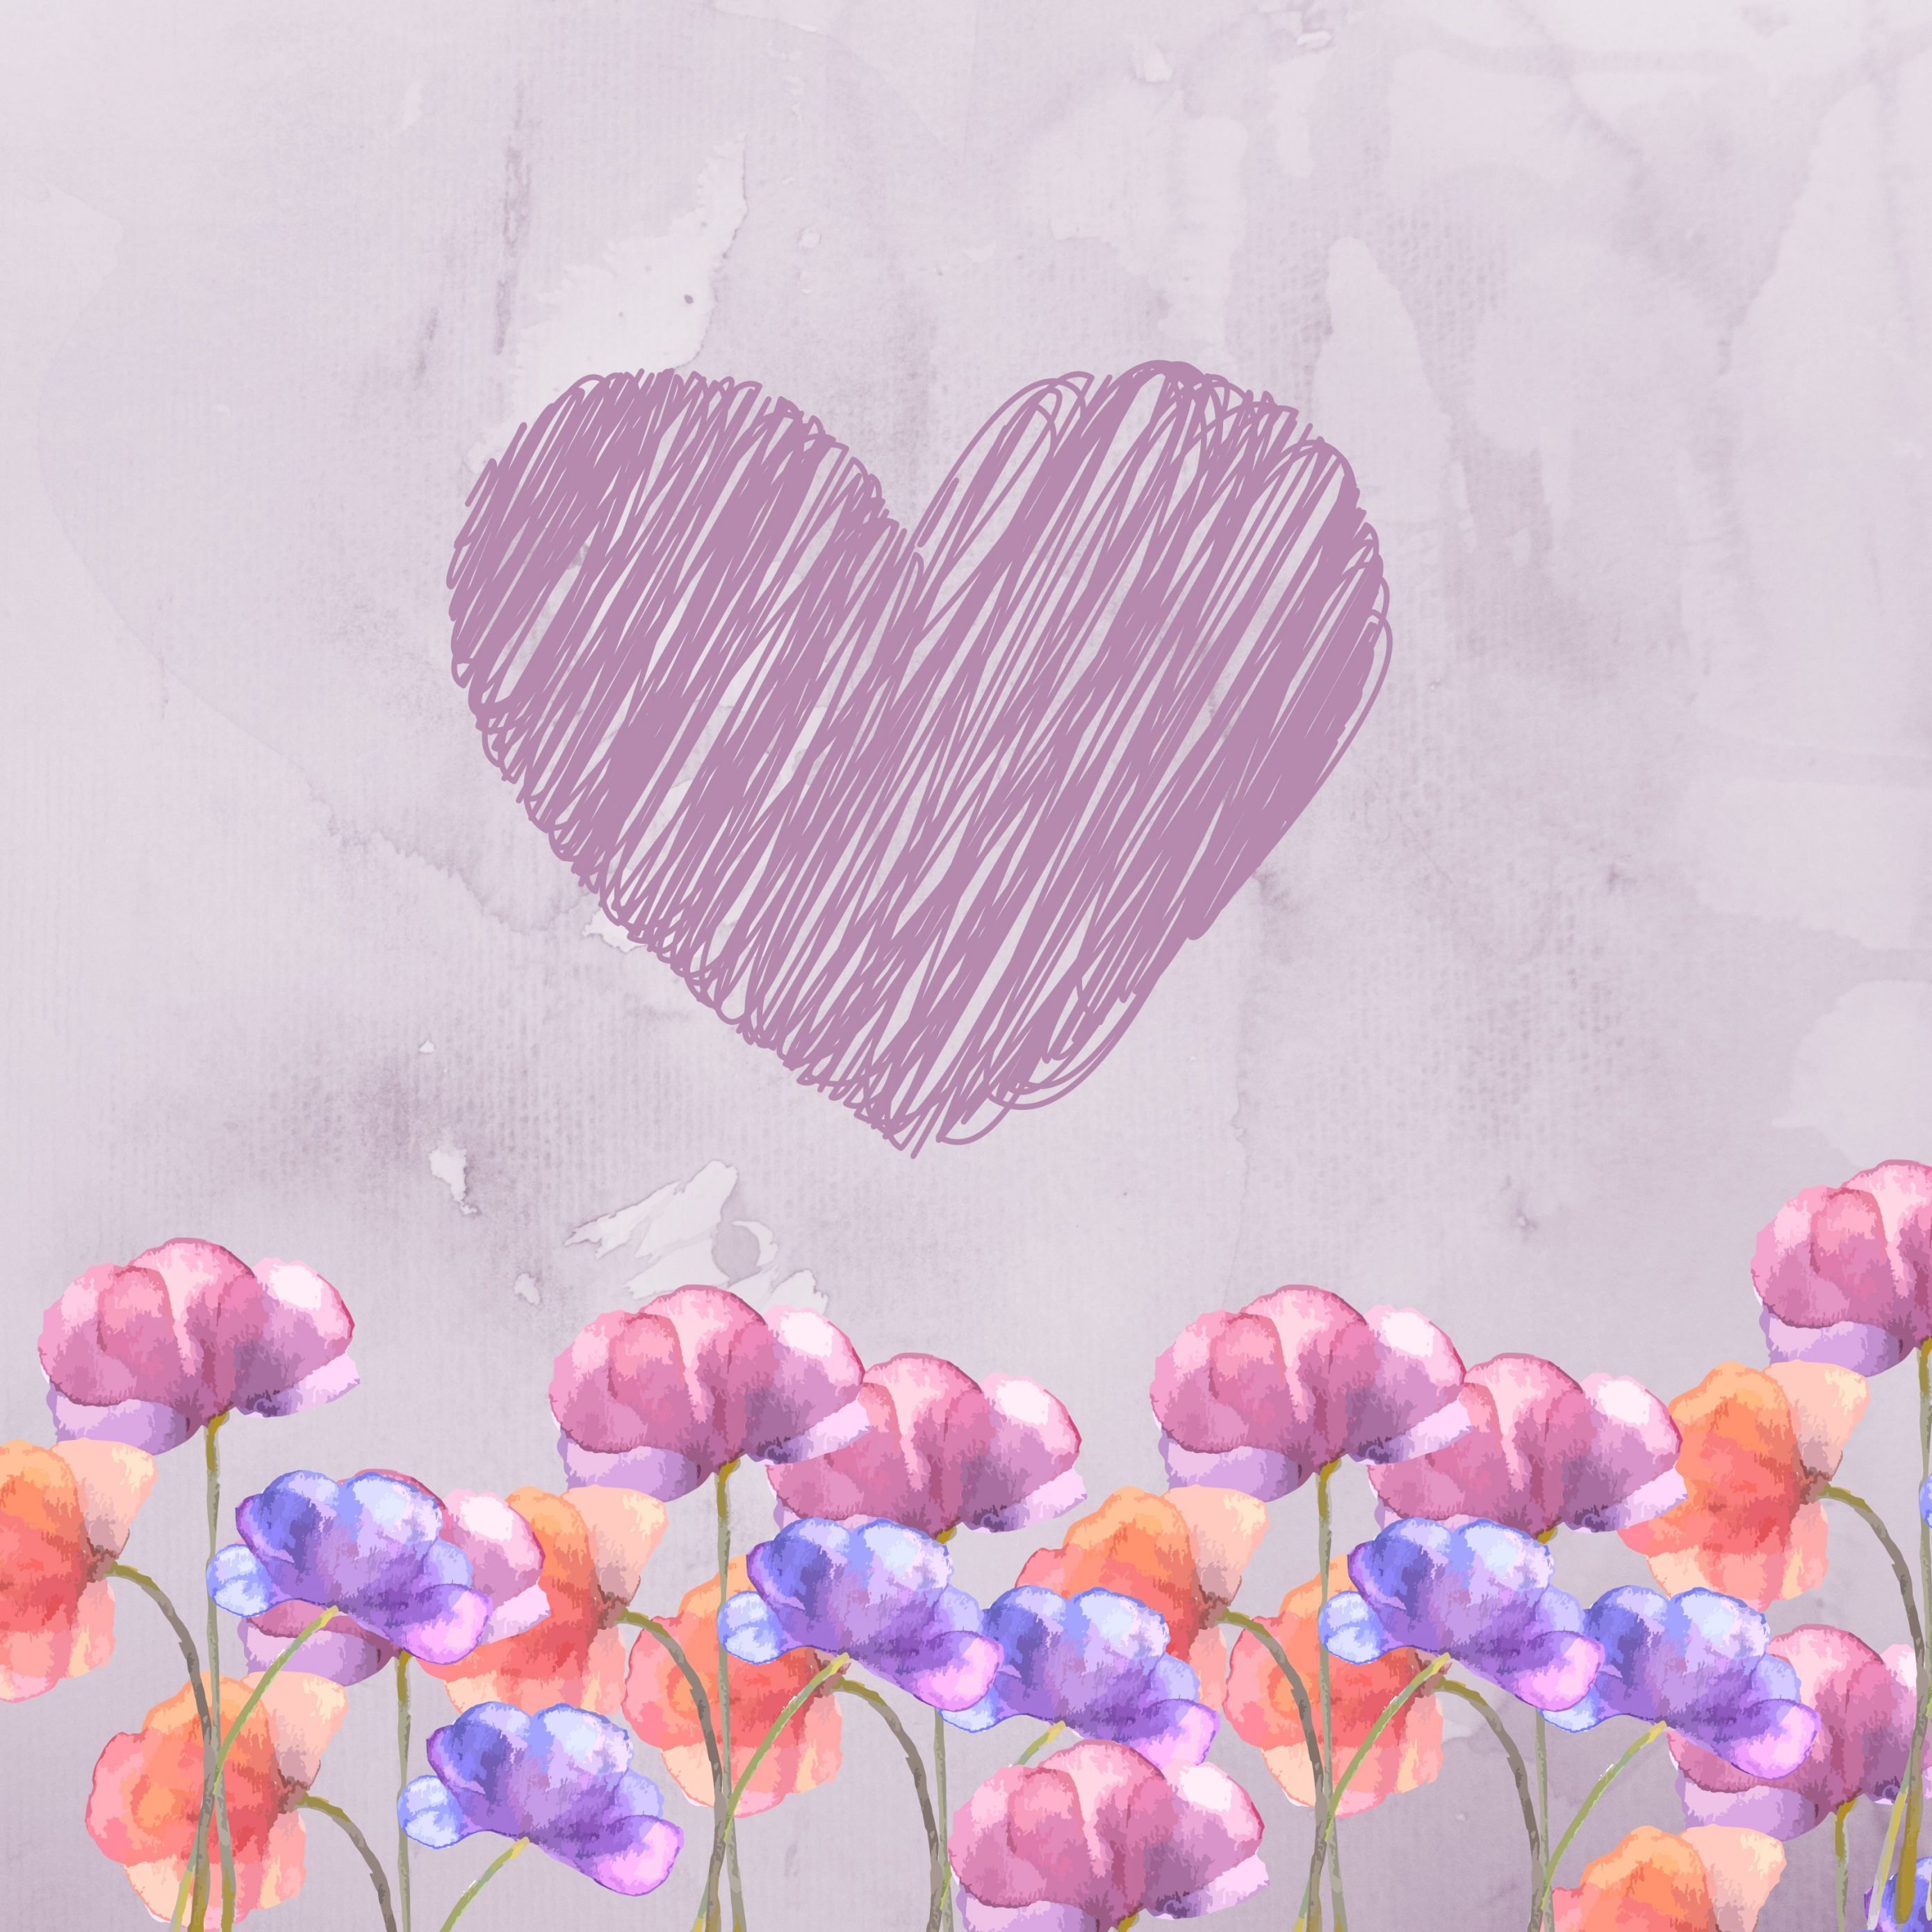 2780x2780 Parallax wallpaper 4k Heart Floral Pastels Ipad Wallpaper 2780x2780 pixels resolution